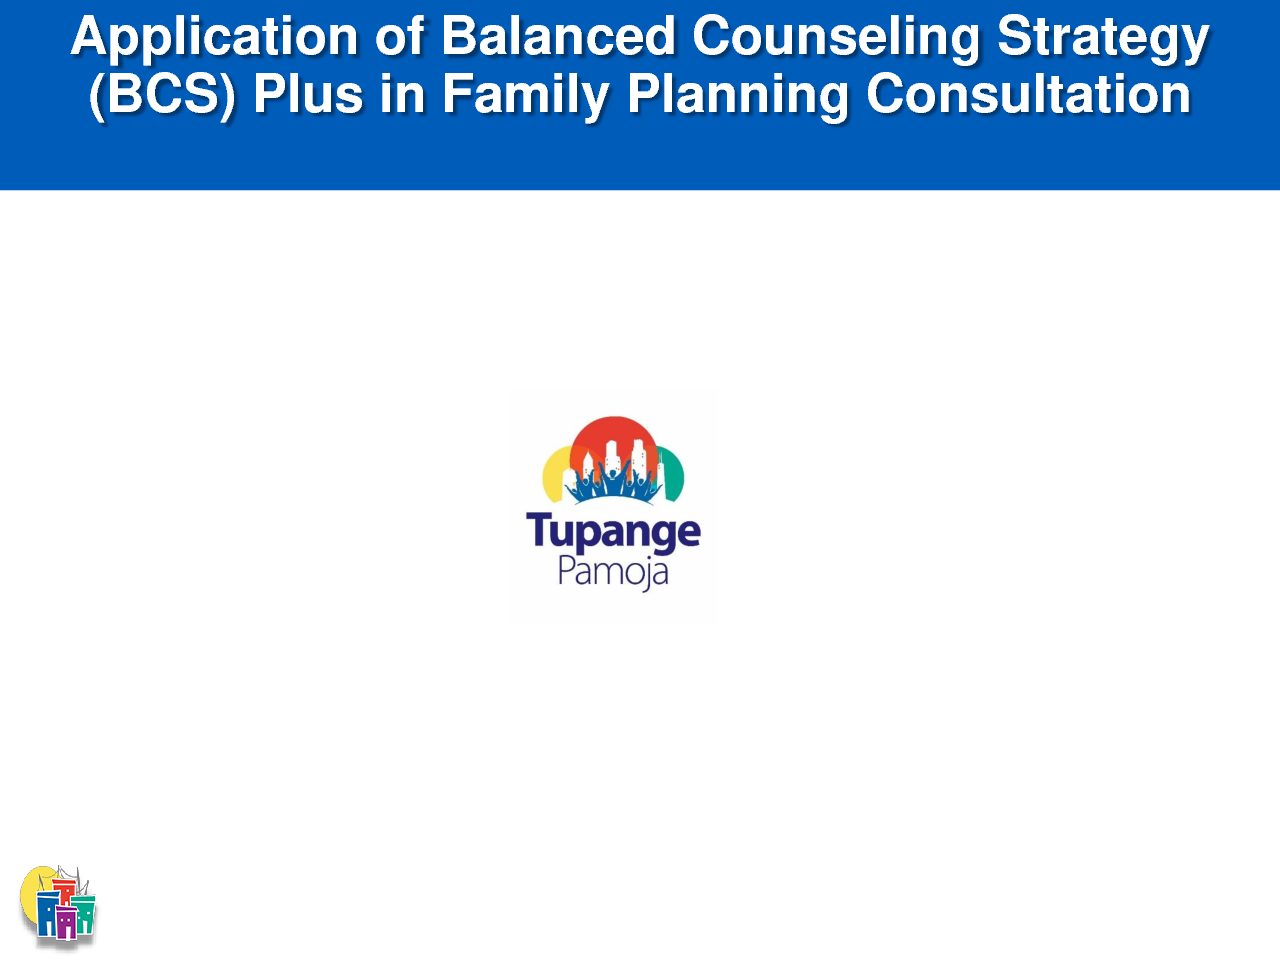 Balanced Counseling Strategy Plus